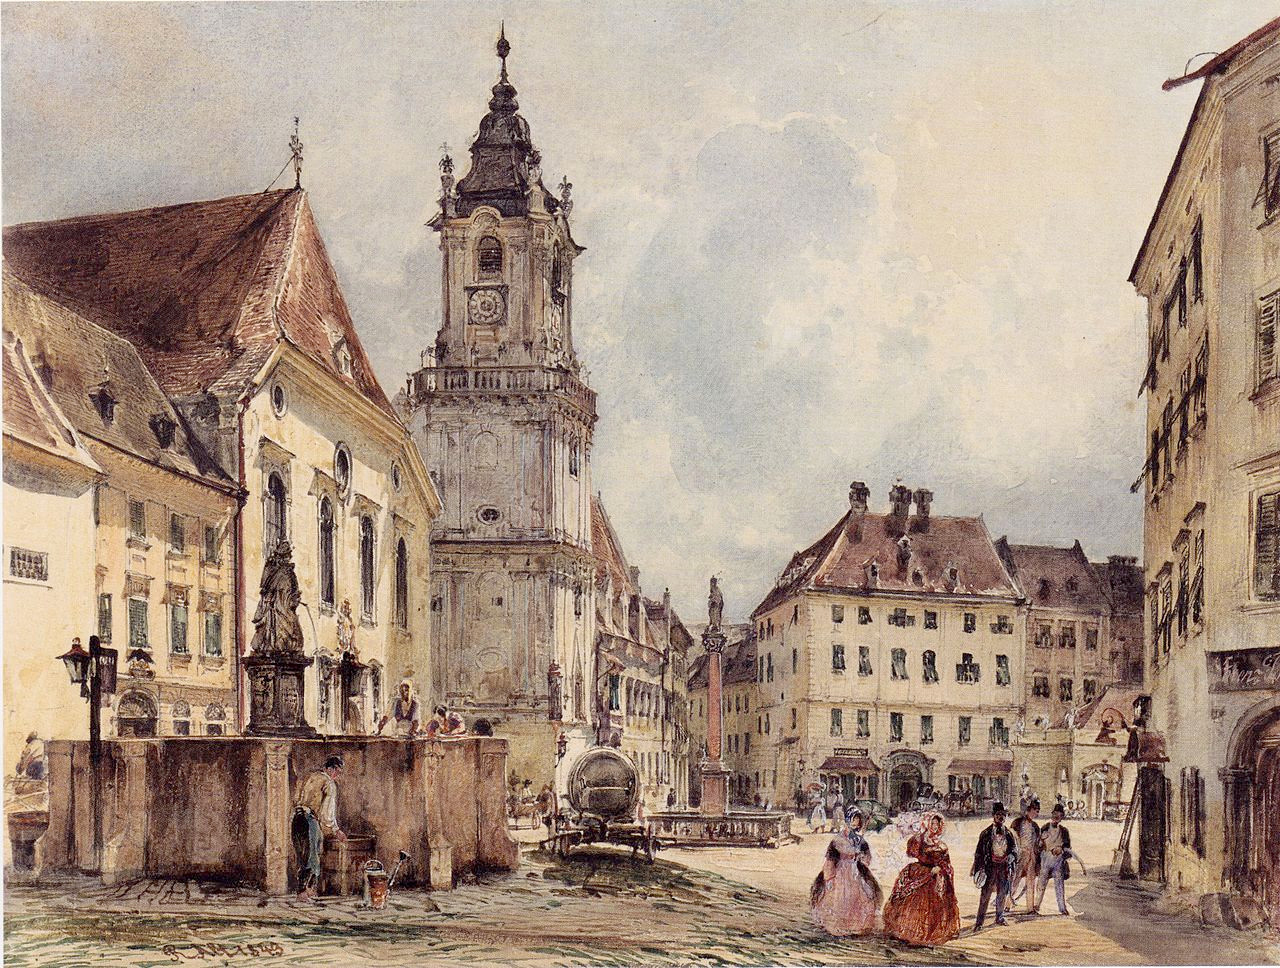 The Main Square in Bratislava by Rudolf von Alt, 1843